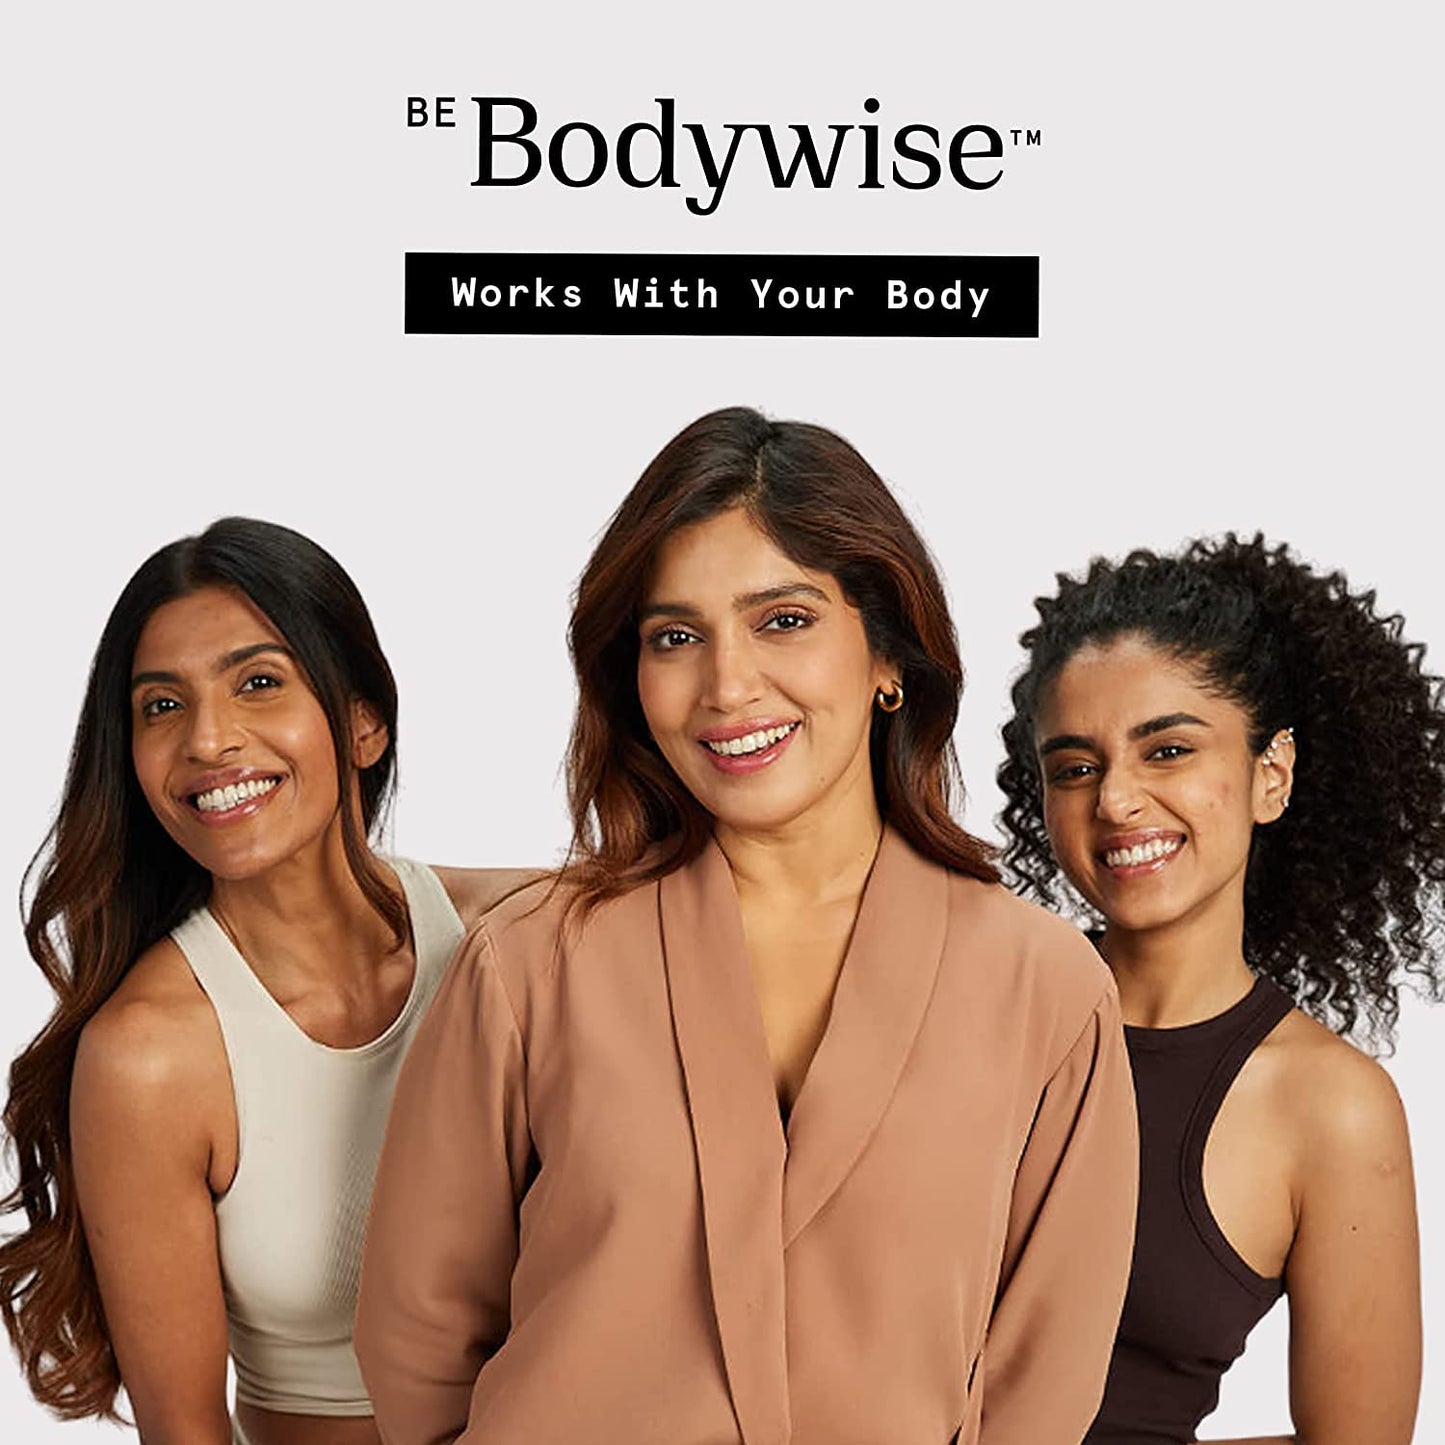 Be Bodywise Body Brightening Kit, 5% Niacinamide Body Wash & 1% Kojic Acid SPF 30 Body Lotion, 450 ml